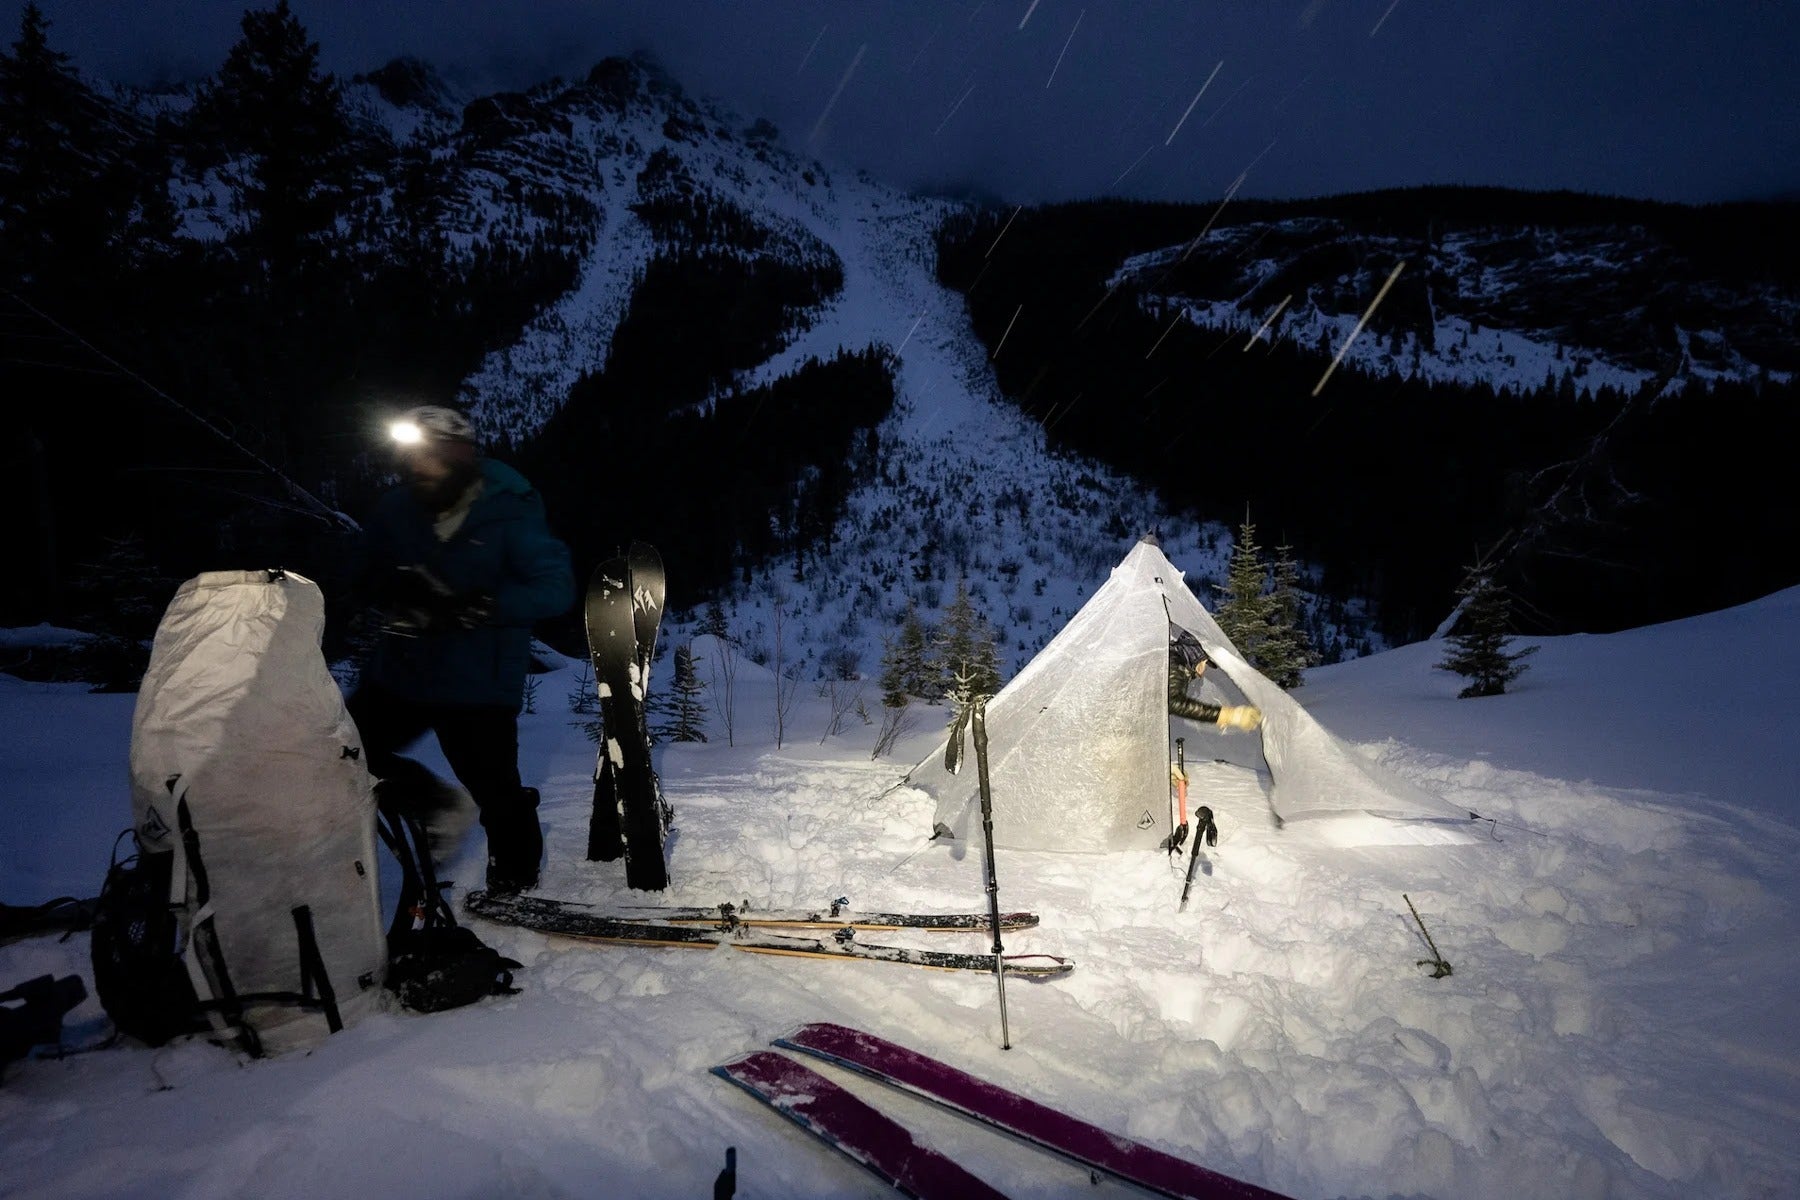 Hyperliter Winter Ski Camping in the Mountains